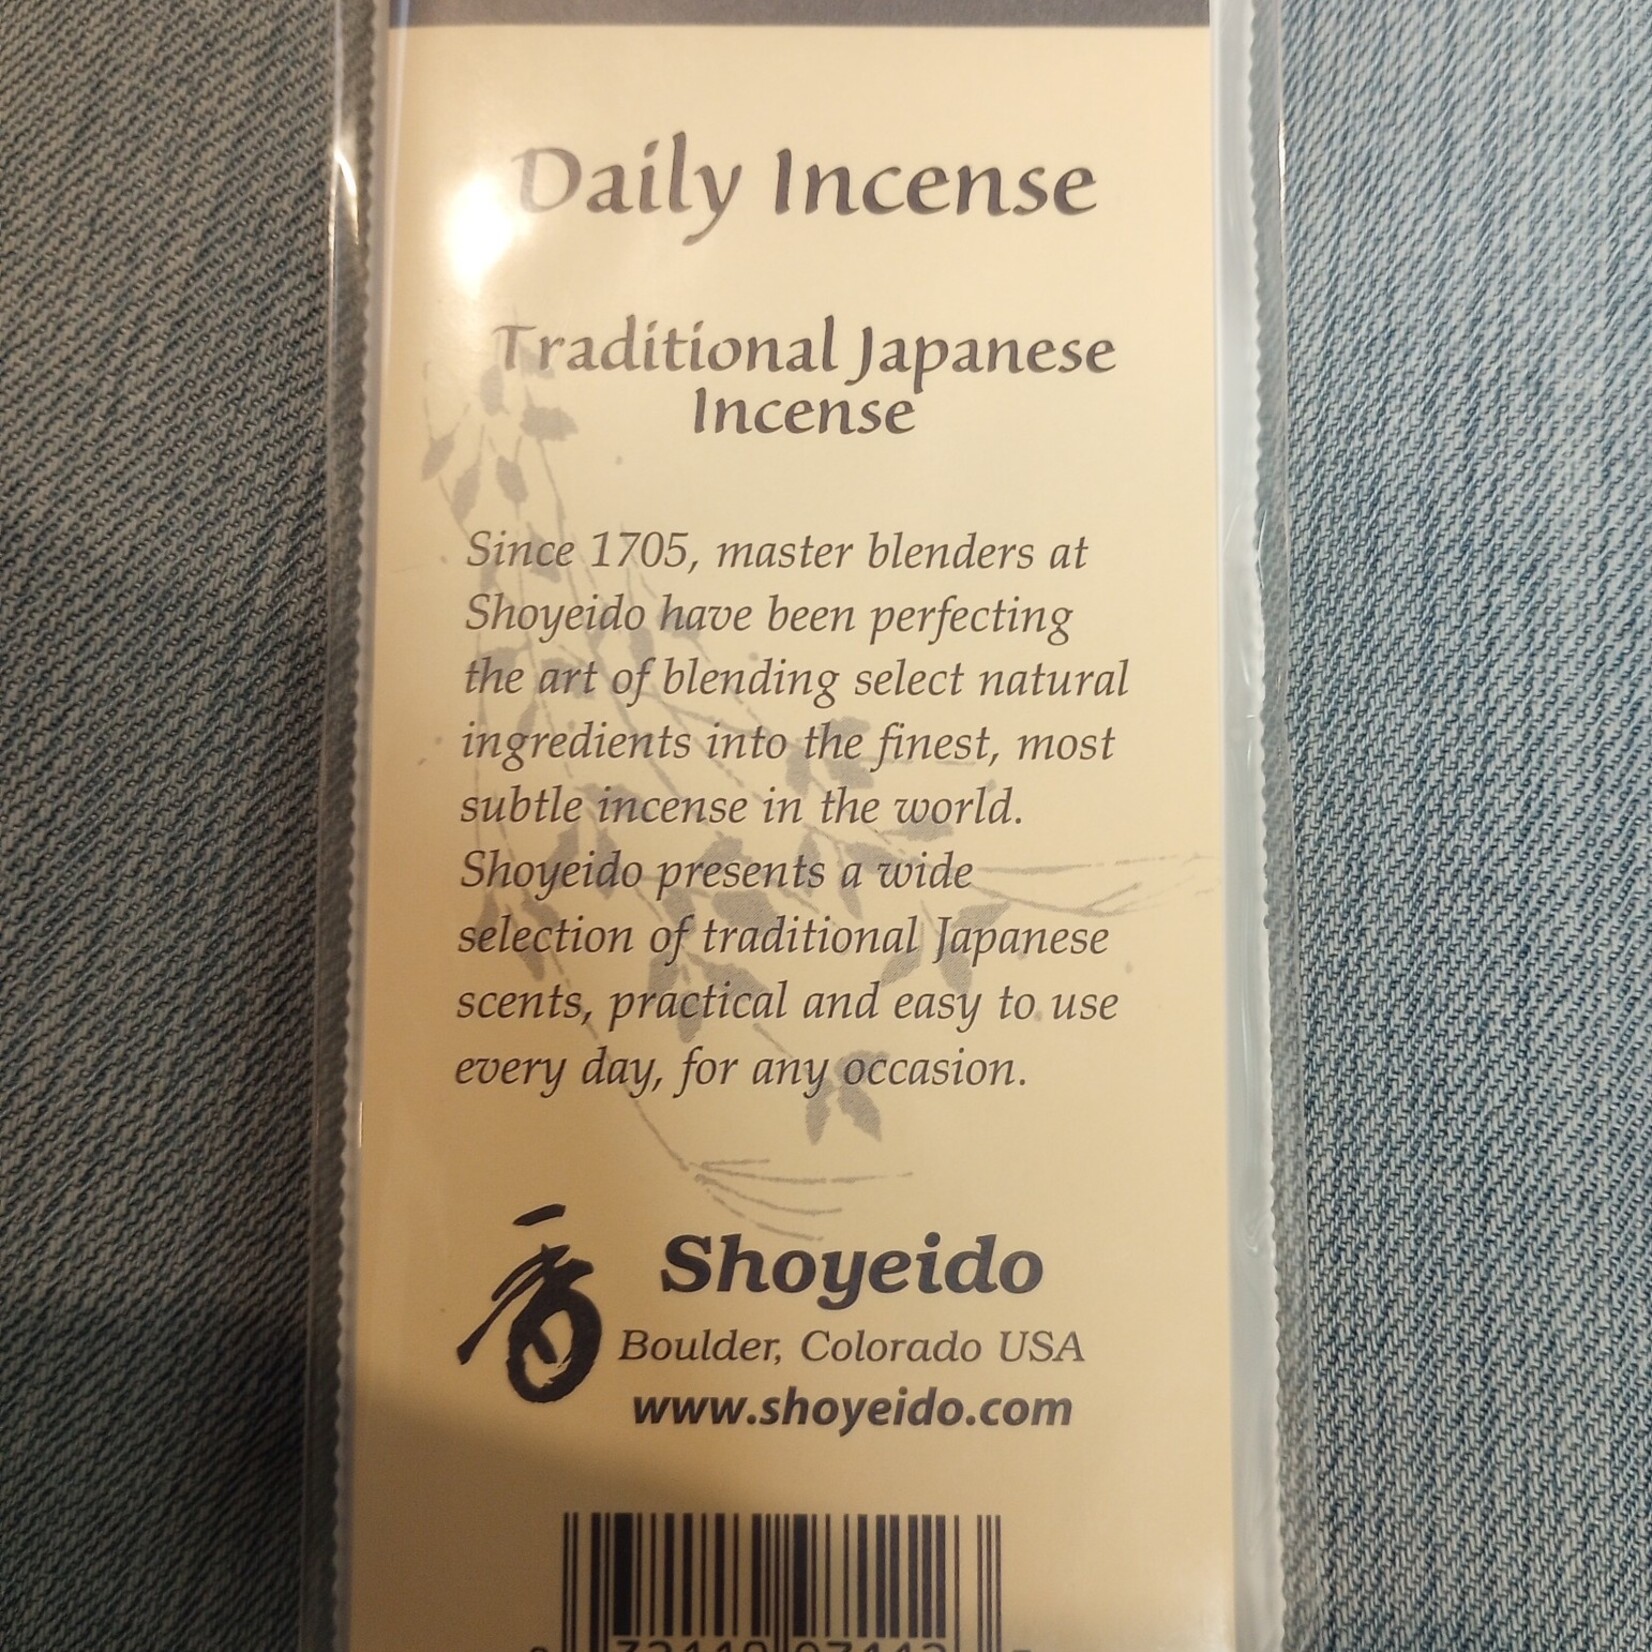 Shoyeido Incense: Daily Incense Sampler